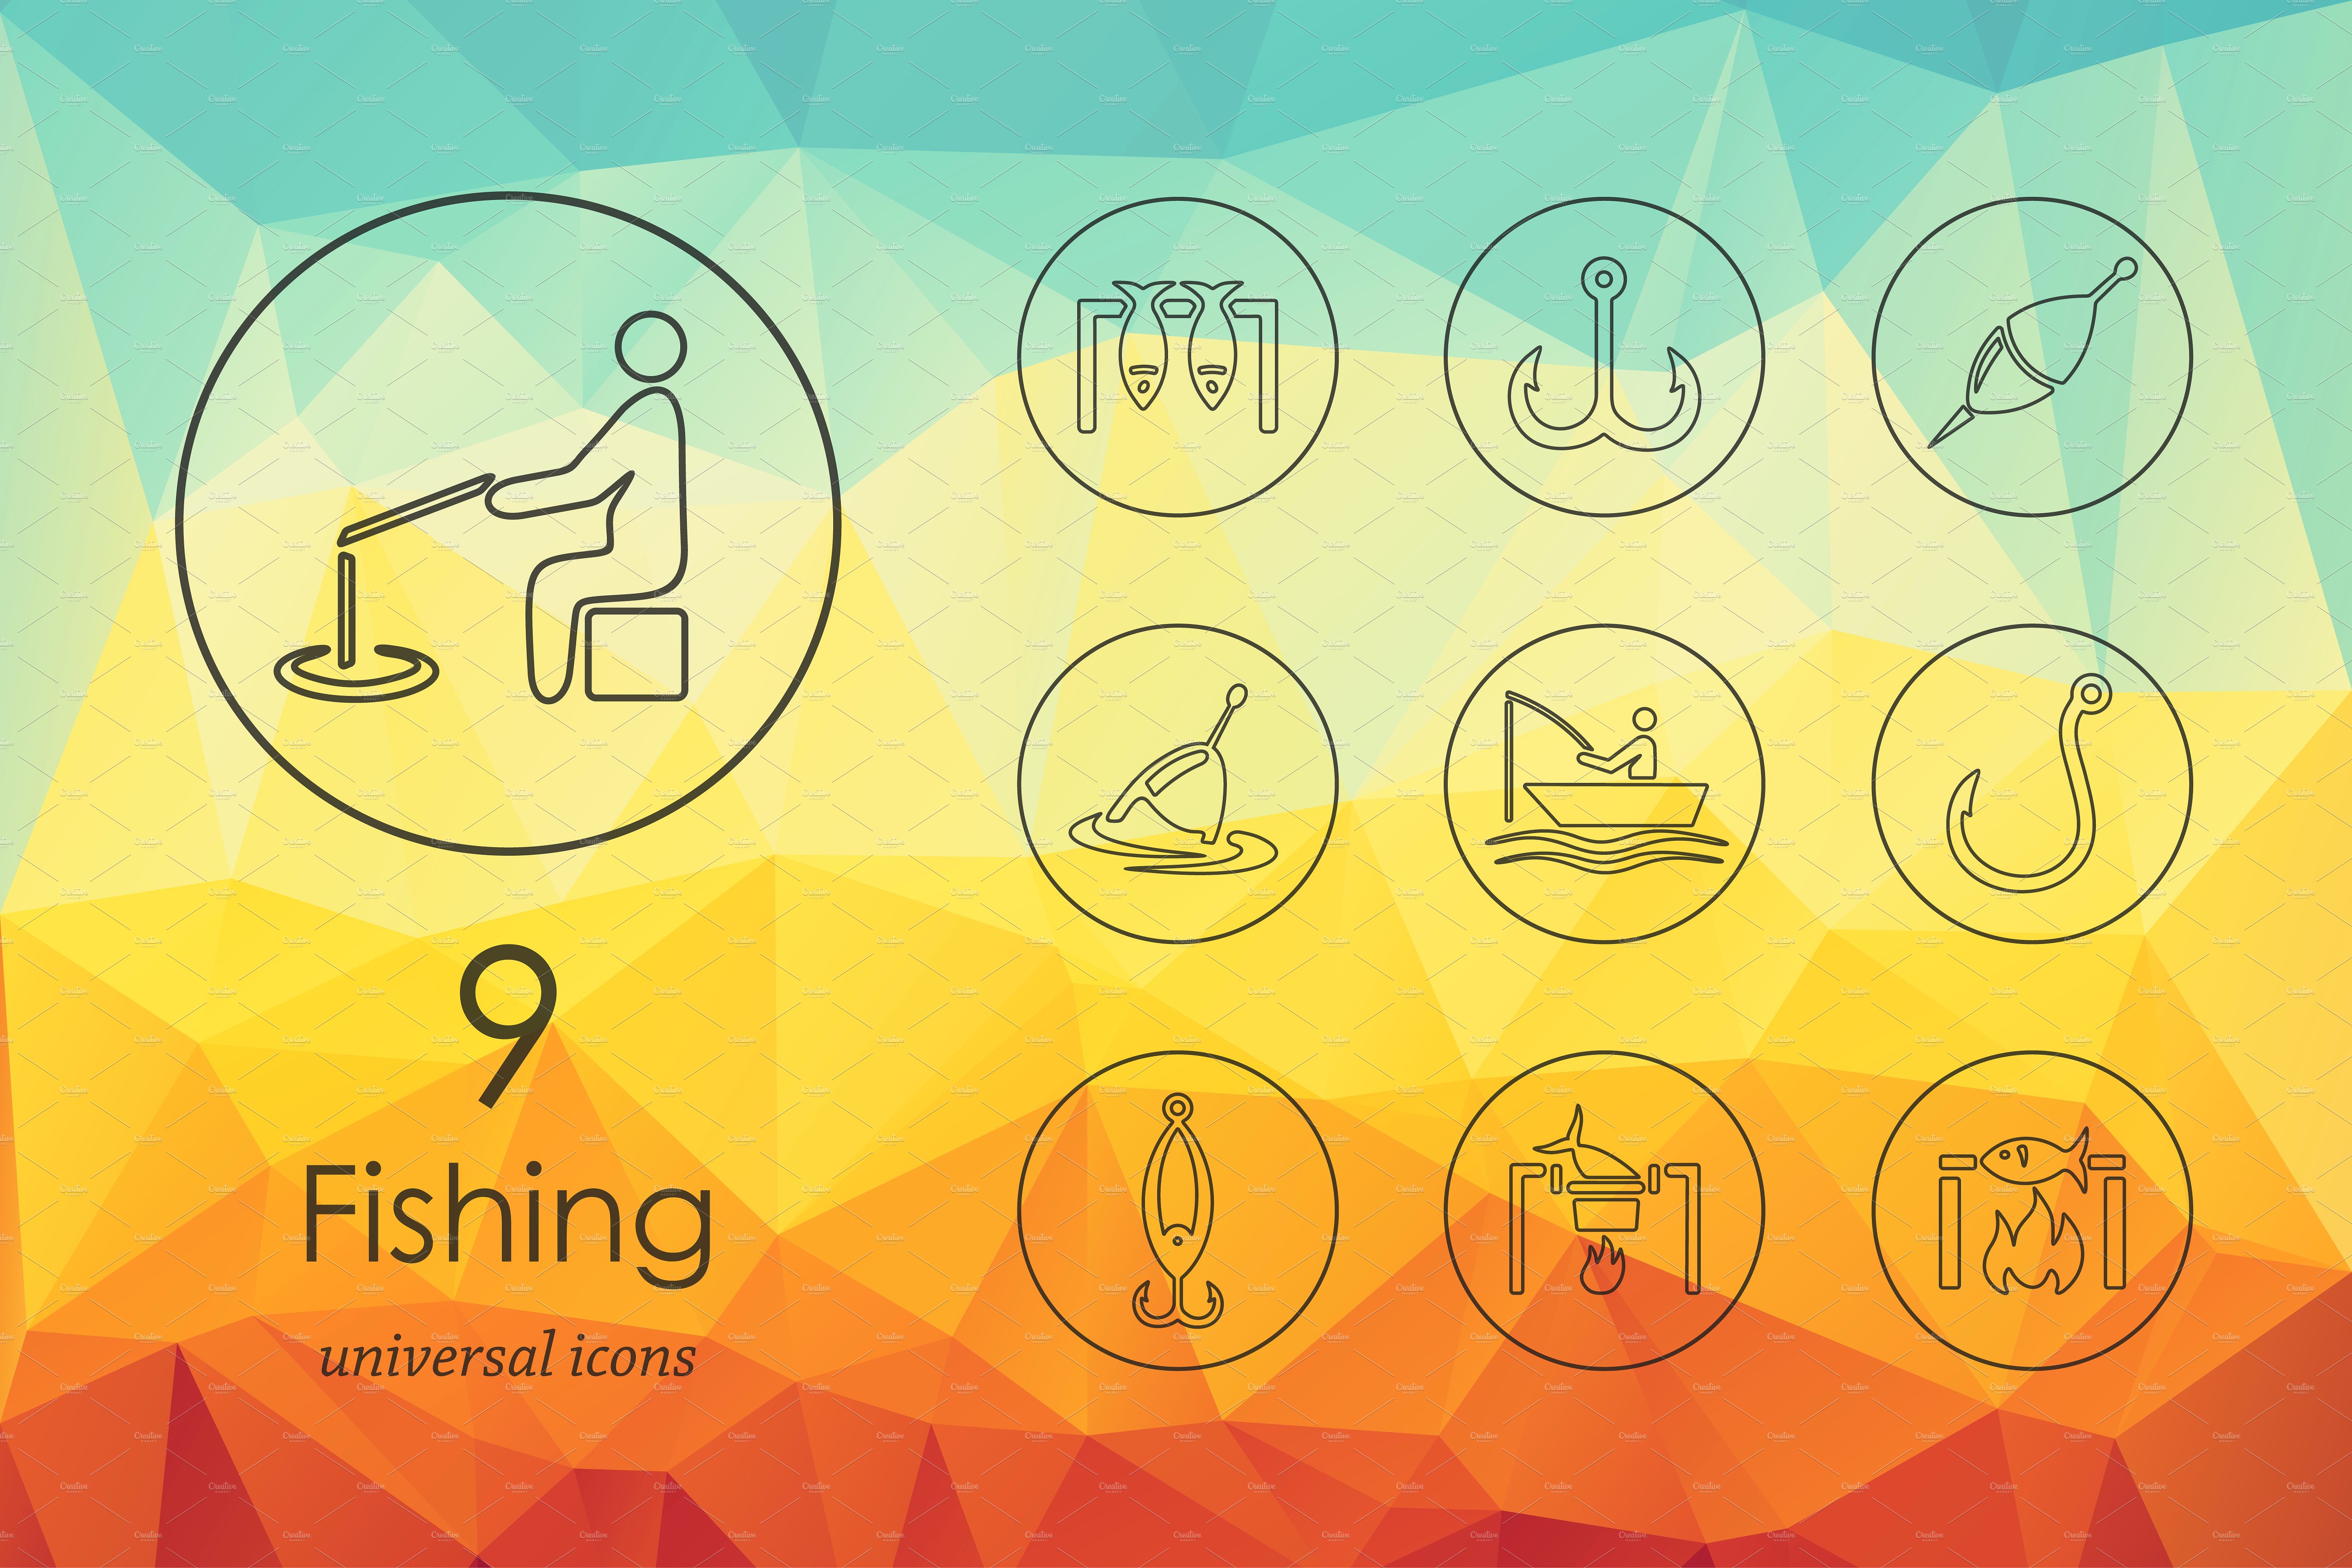 钓鱼相关的图标 9 fishing icons #91177